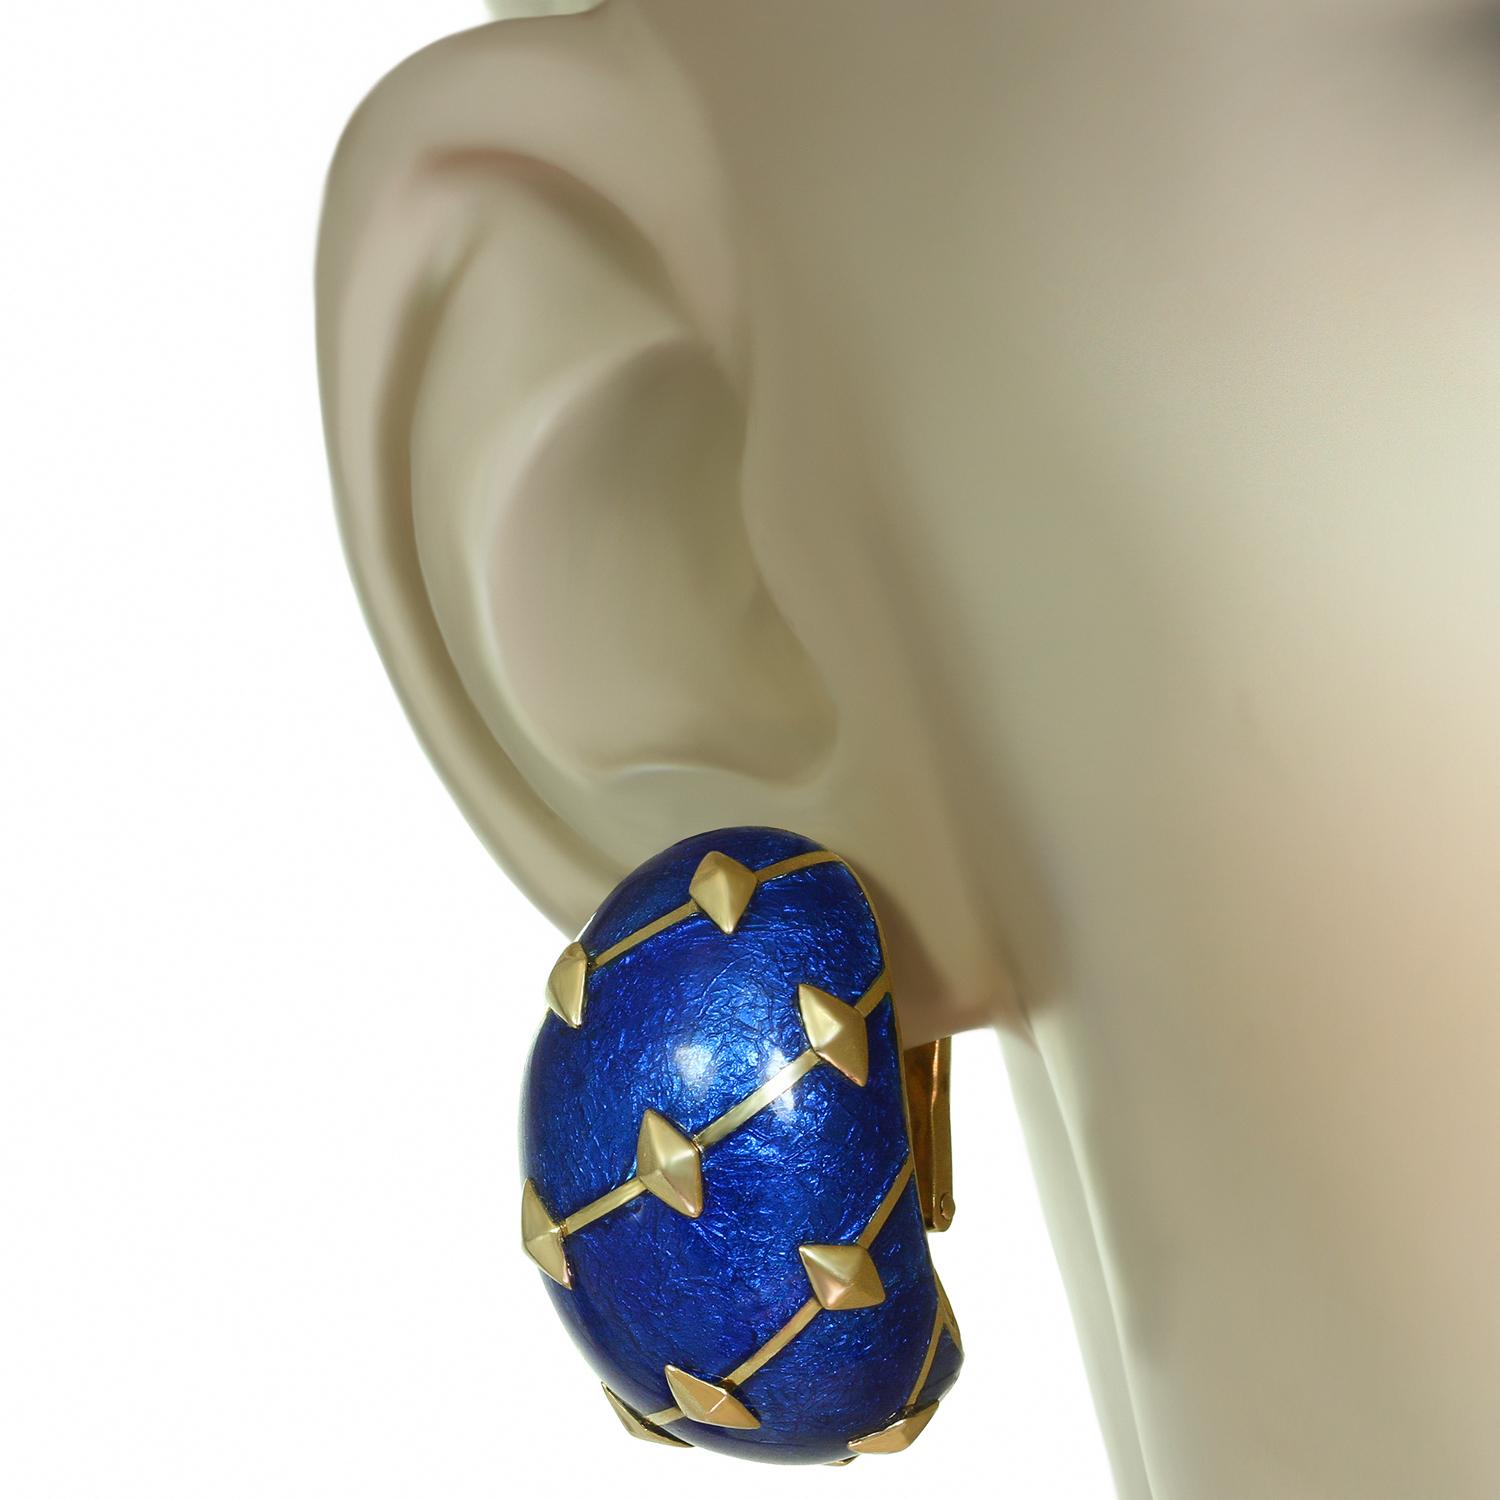 Women's Tiffany & Co. Schlumberger Dot Losange Blue Enamel Bangle Bracelet and Earrings